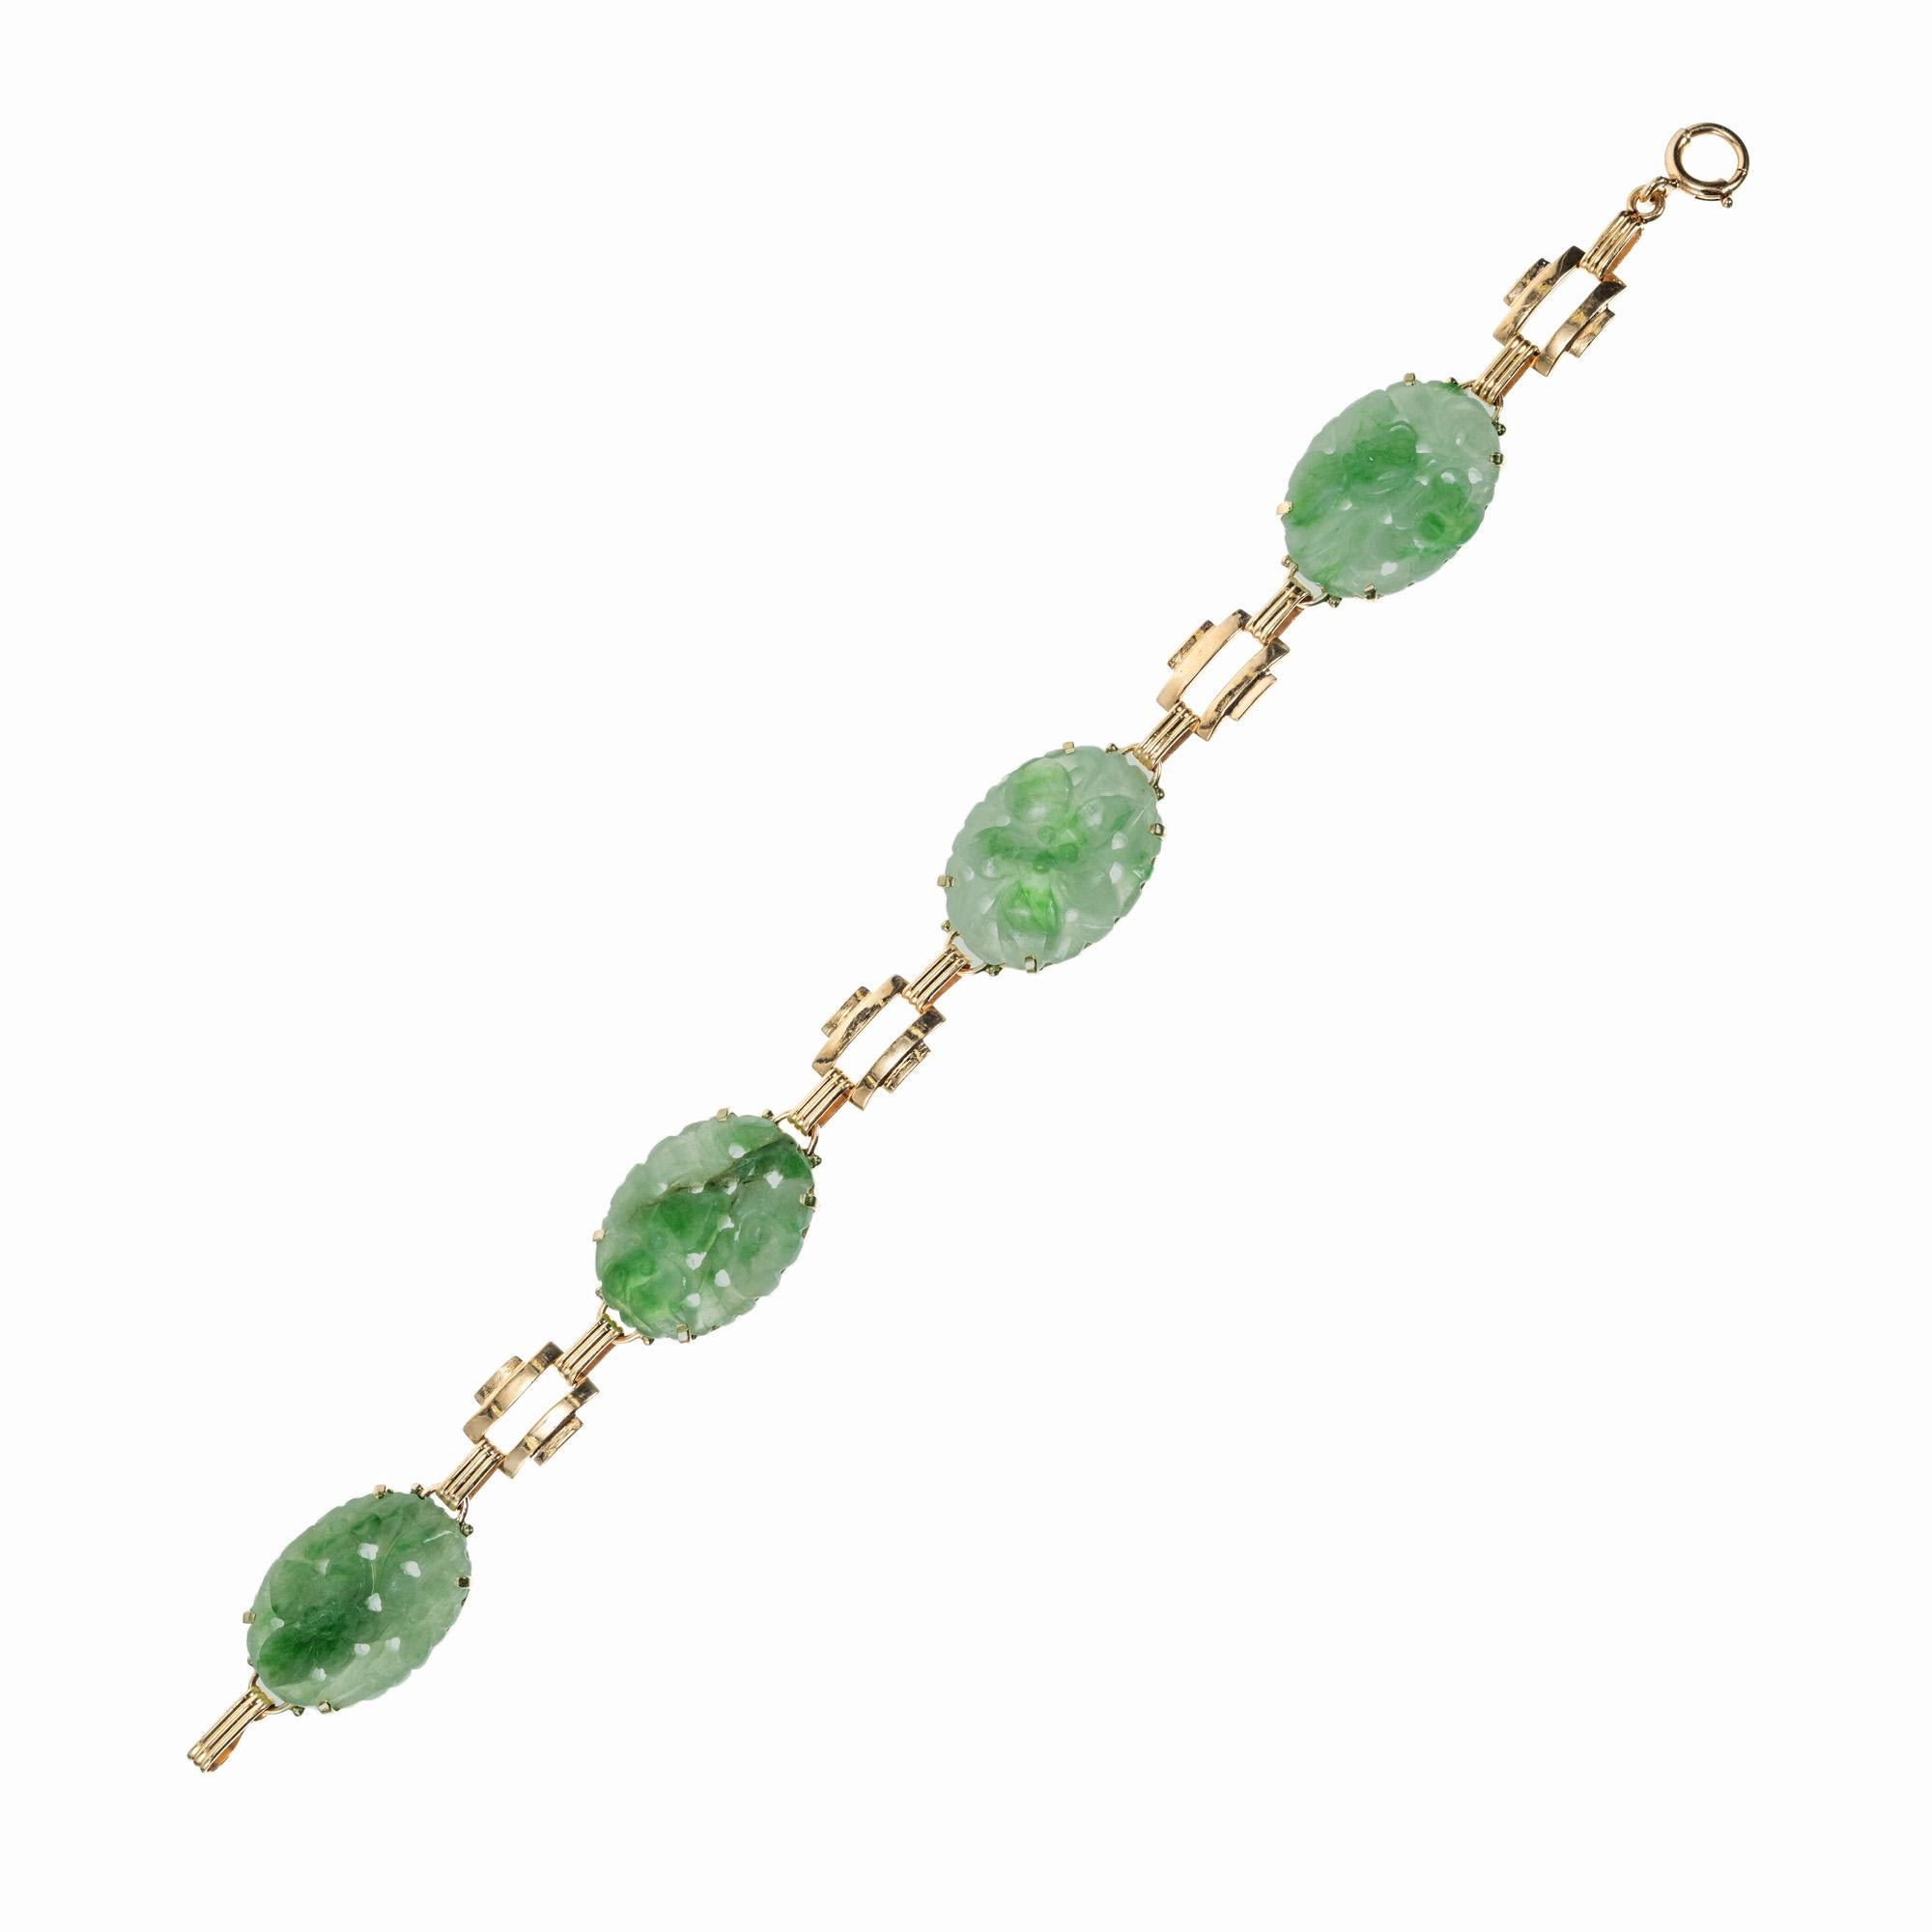 1940's Original Art Deco Retro jadeite jade bracelet. GIA certified 4 oval carved variegated flower design jade 14k yellow gold bracelet. circa 1940's. Certified natural, untreated jade.  7 inches in length. 

Natural untreated Jadeite Jade oval